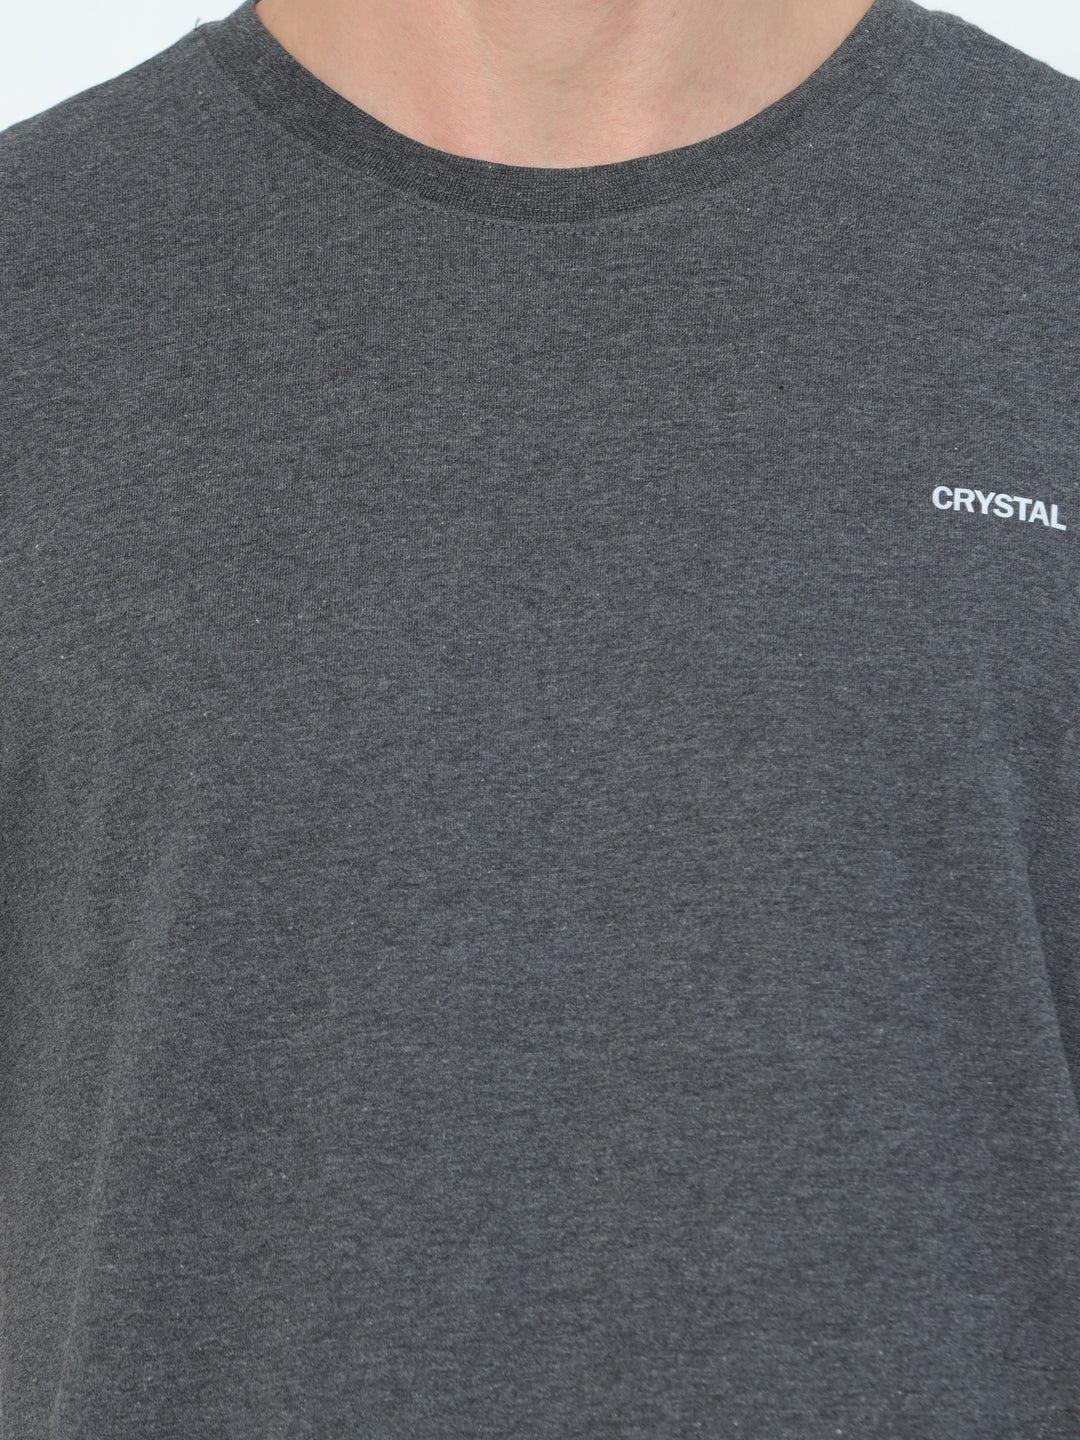 BU 07 Crew T-Shirt - Charcoal Melange